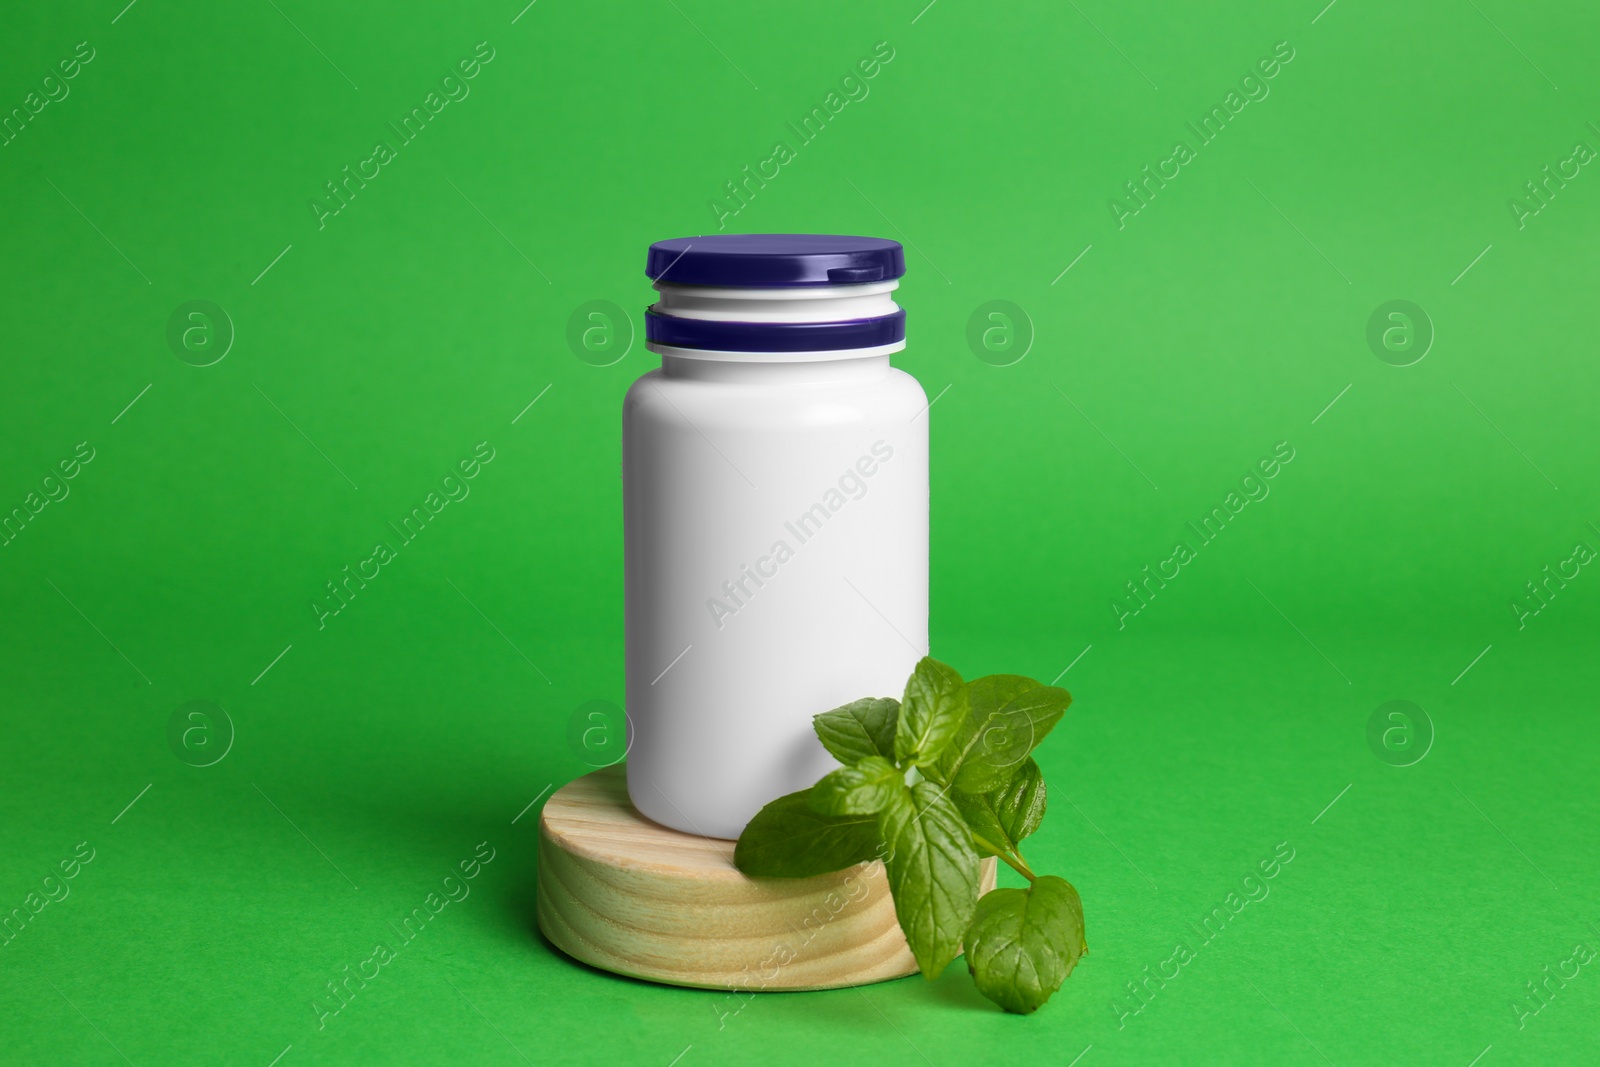 Photo of Plastic medicine bottle and leaves on green background. Medicament